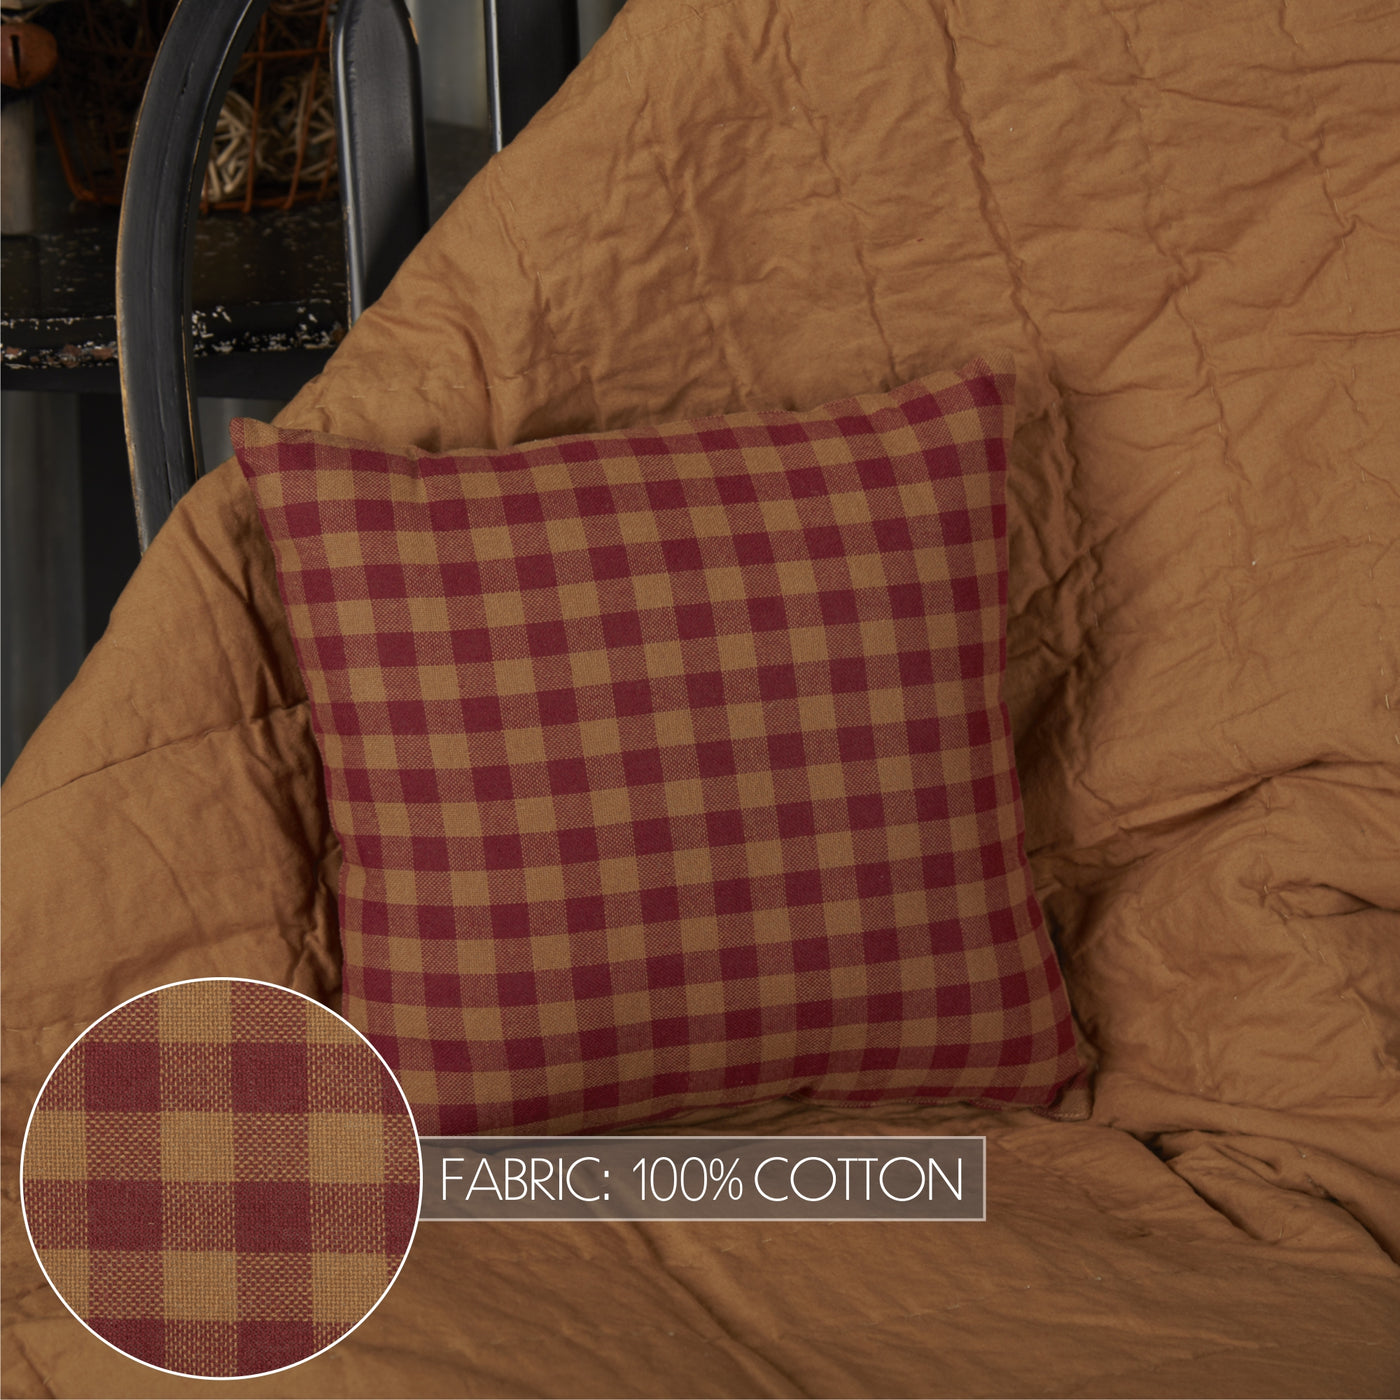 Burgundy Check Fabric 16" Throw Pillow